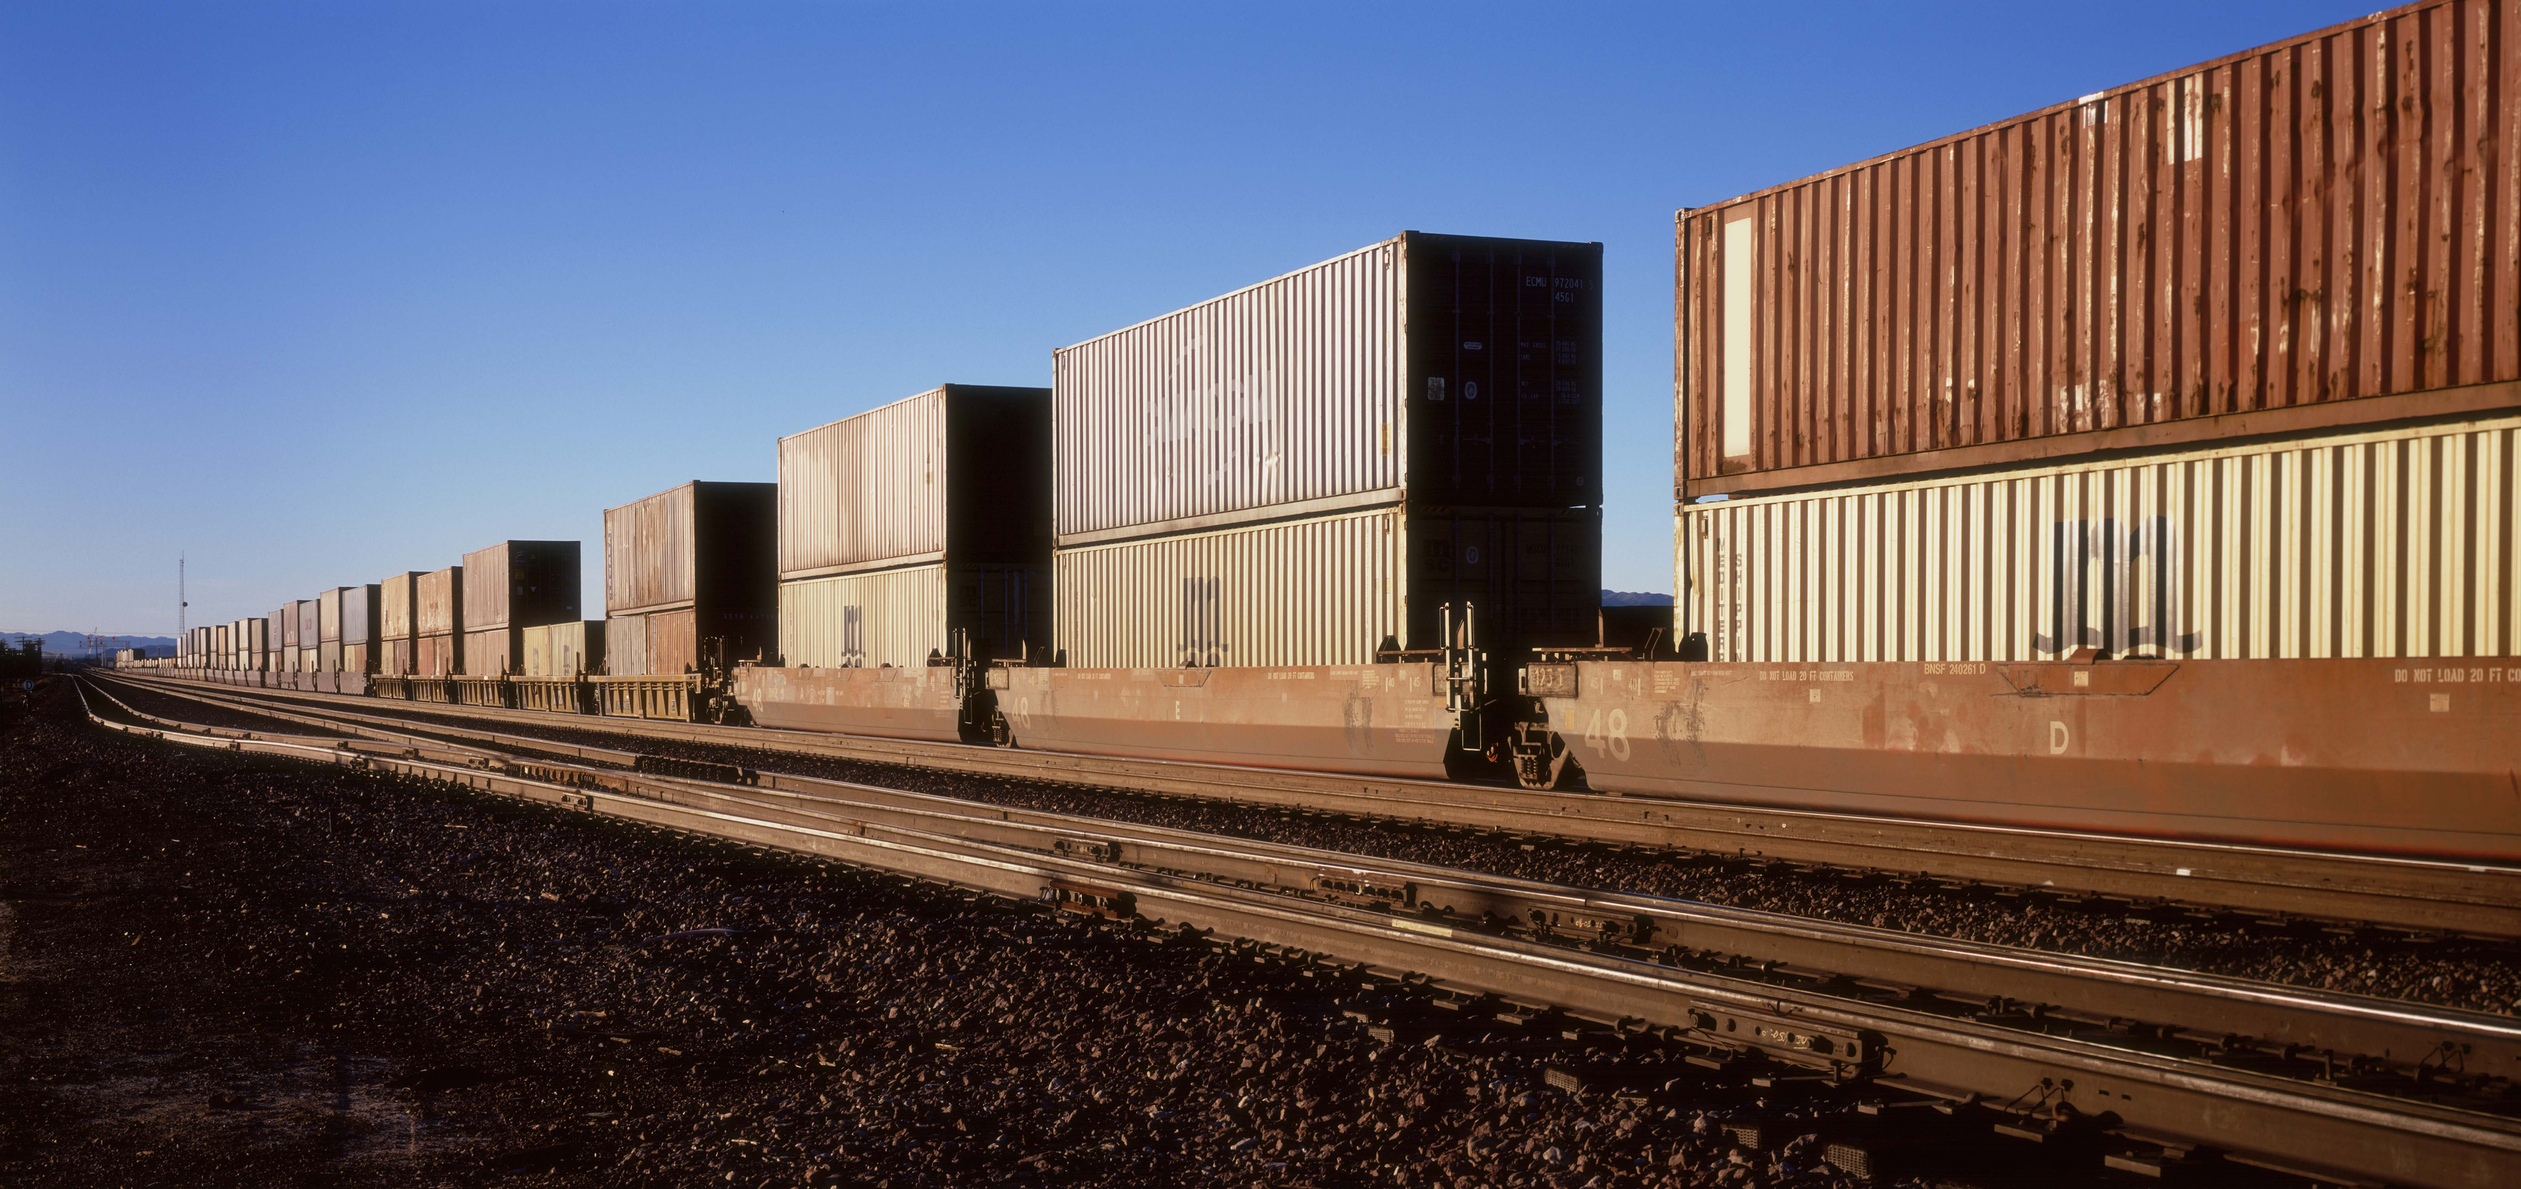 Railroad supply chain